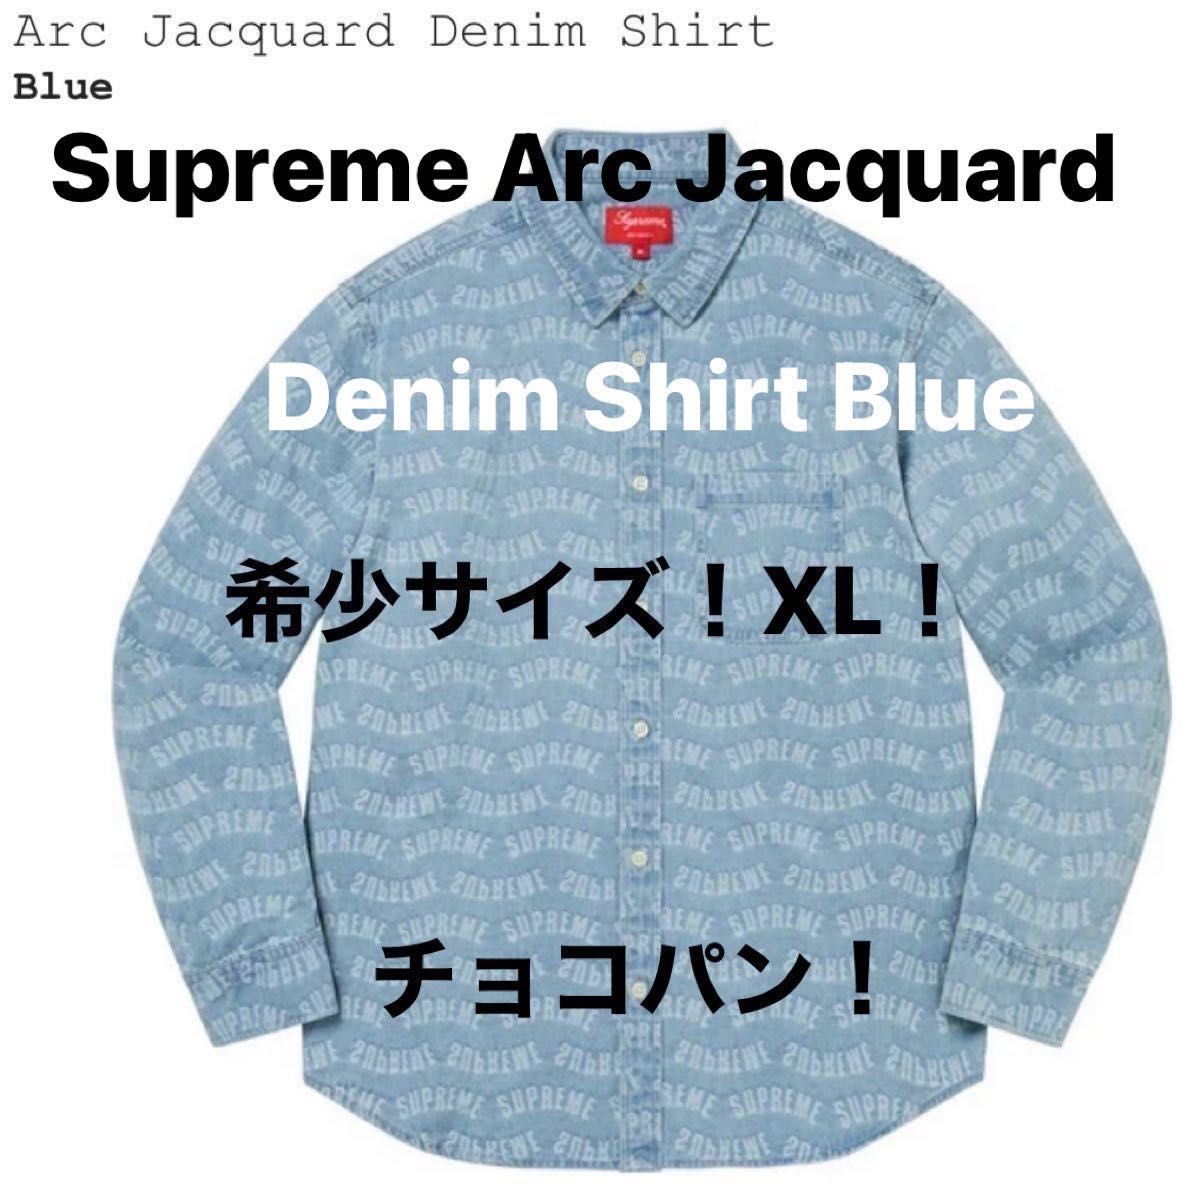 Supreme Arc Jacquard Denim Shirt BlueSupreme Arc Jacquard Denim